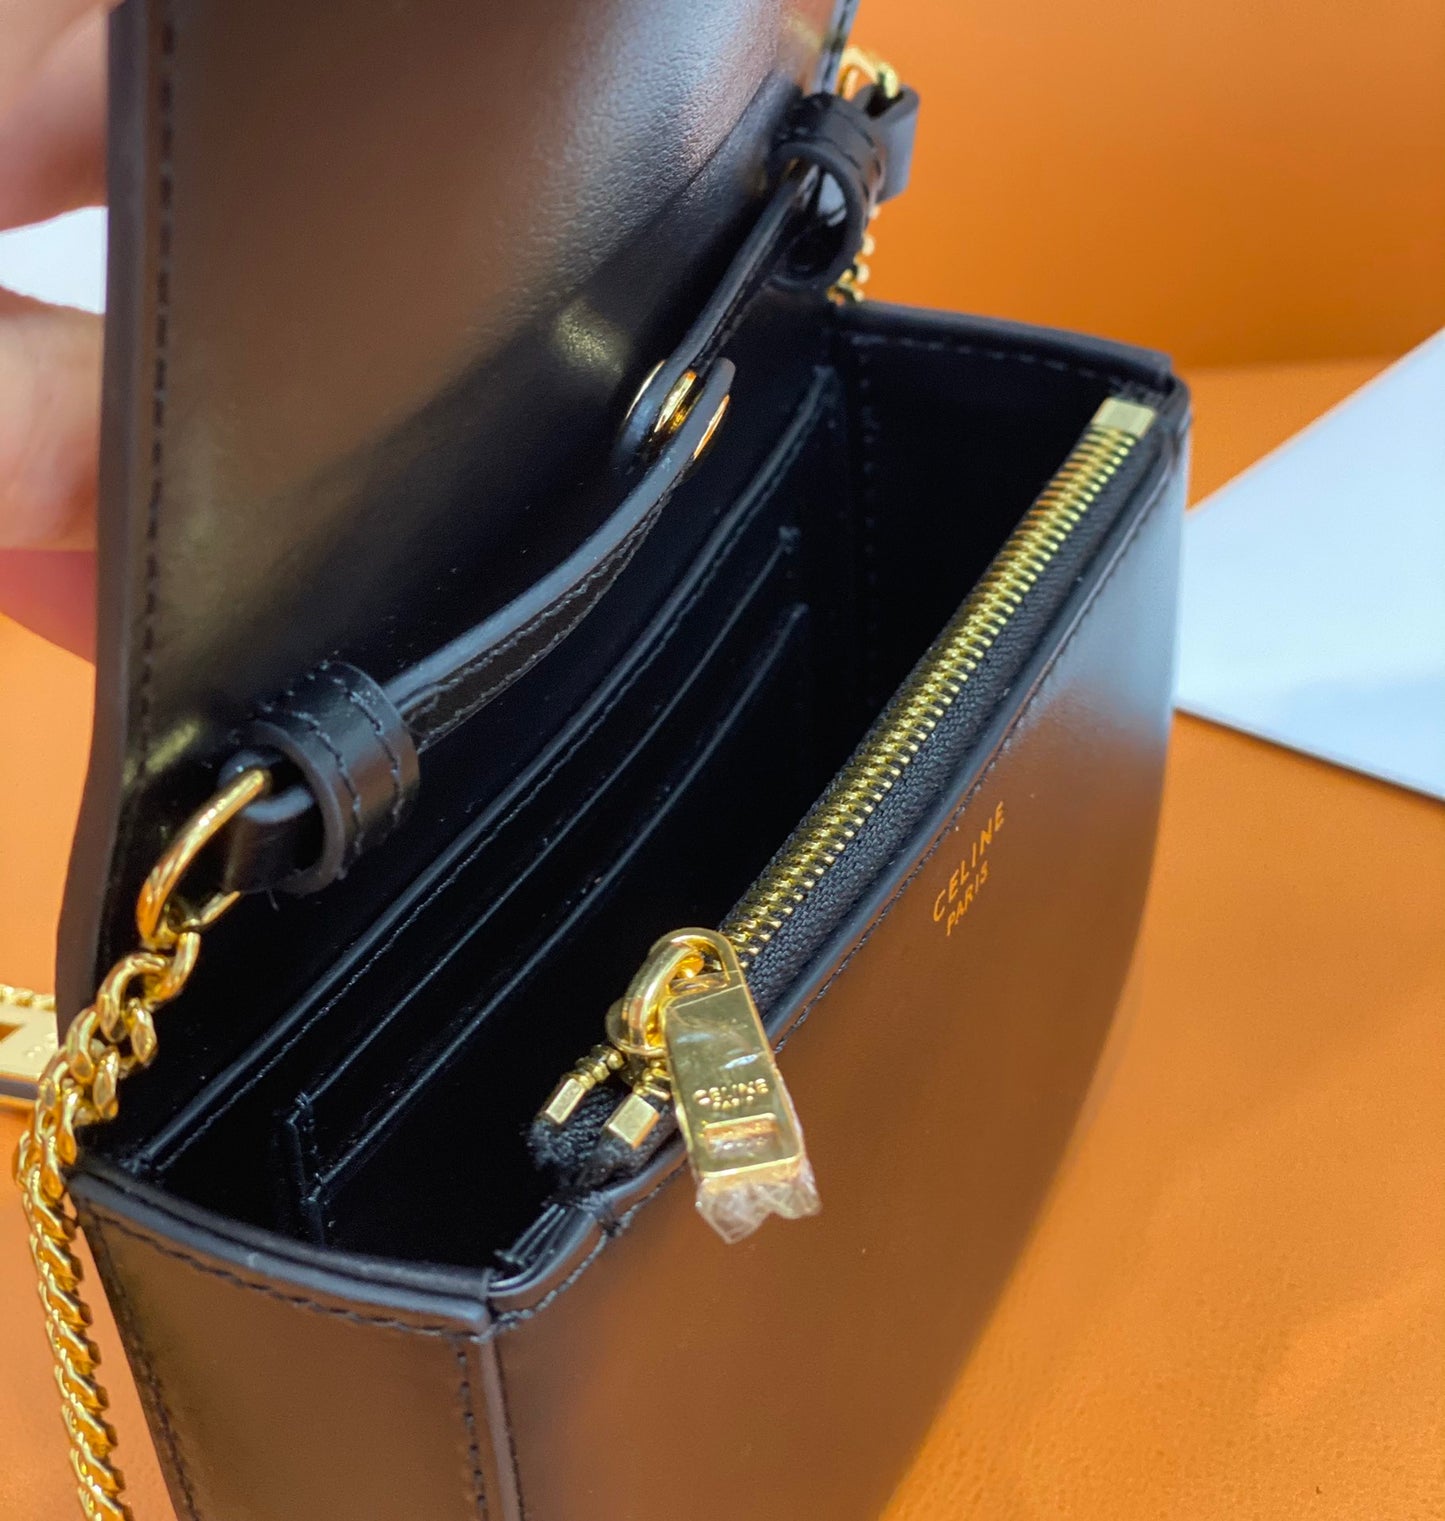 Celine Leather Small Bag